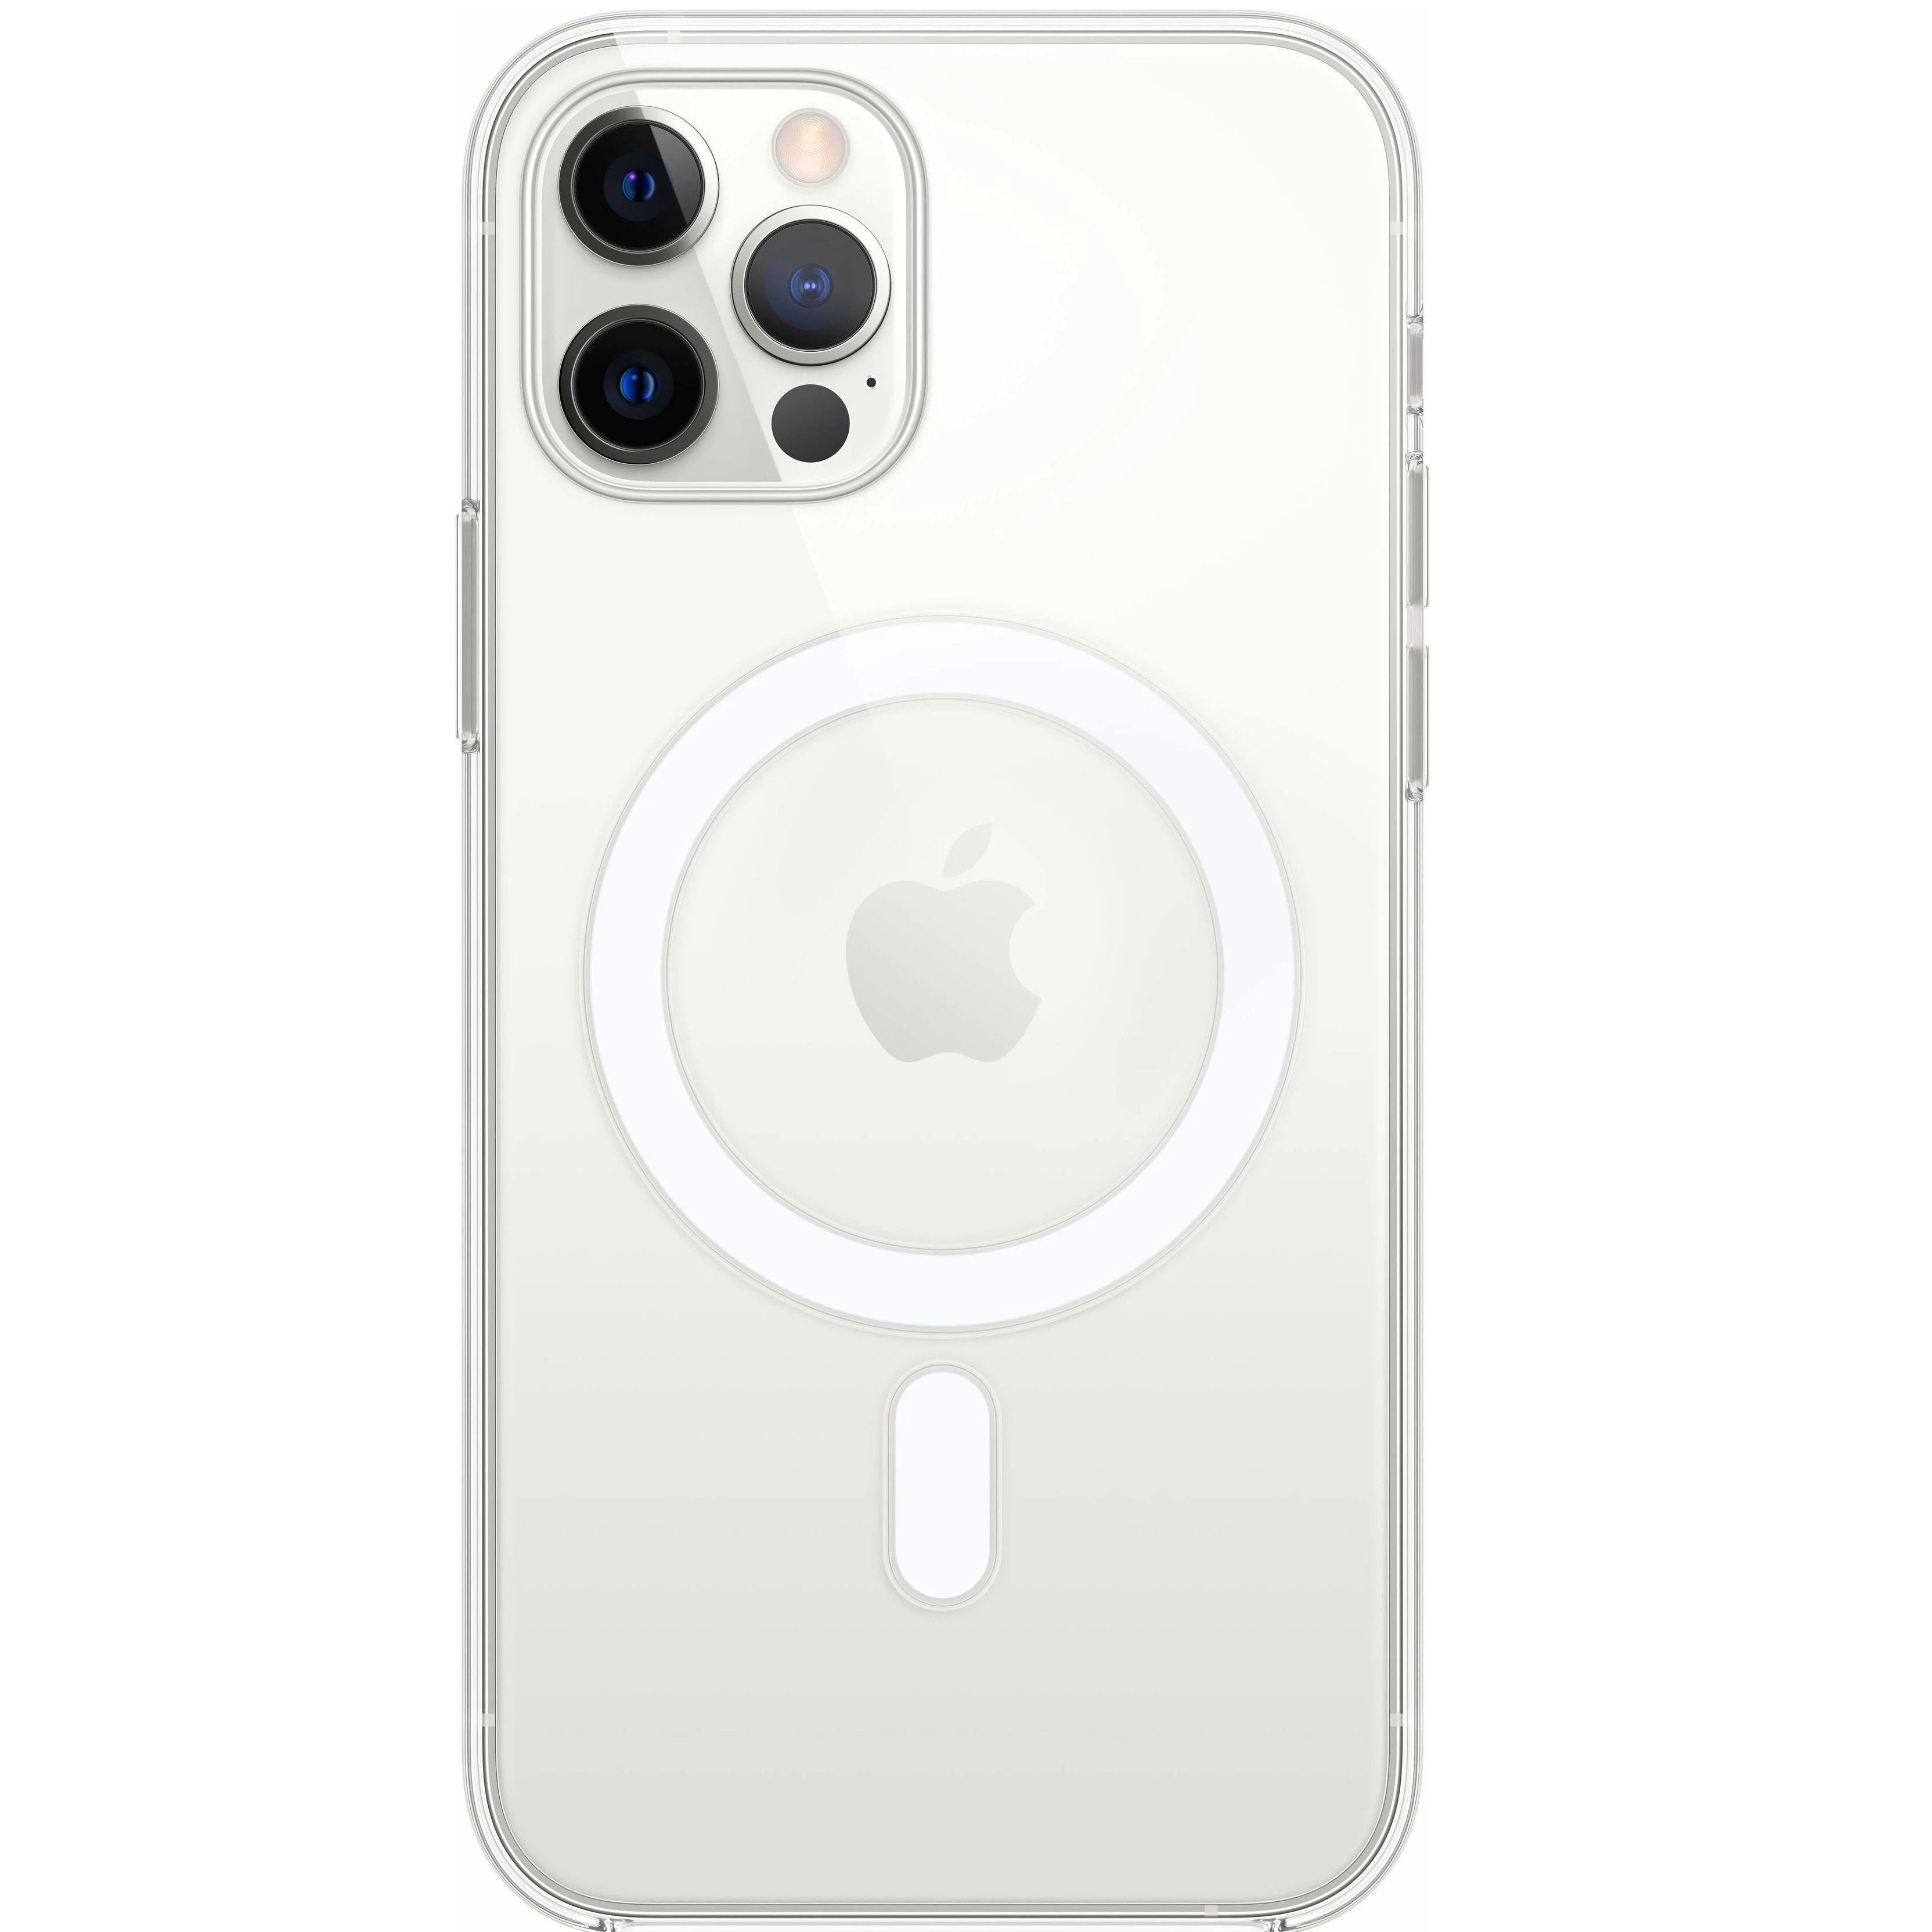 Емкость iphone 12 pro. Iphone 11 64gb White. Iphone 11 Pro 64gb. Apple iphone 11 Pro Max. Apple iphone 11 Pro 64gb Silver.